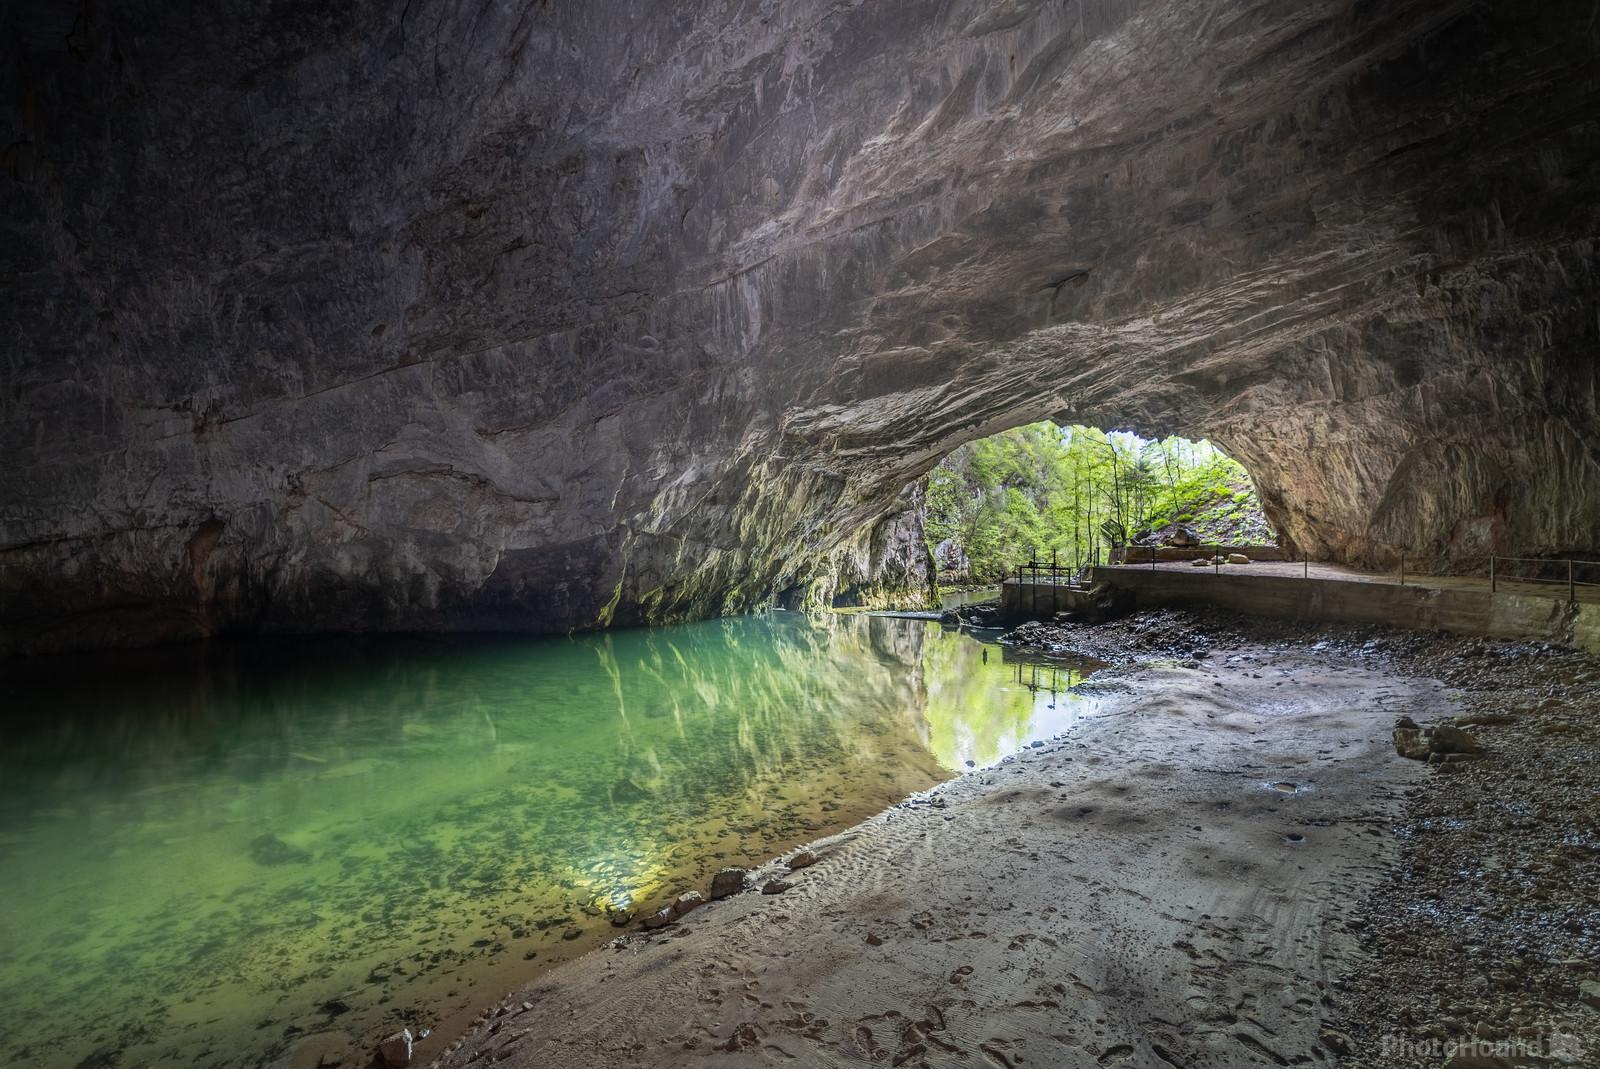 Image of Planinska Jama (Planina Cave) by Matej Tratnik